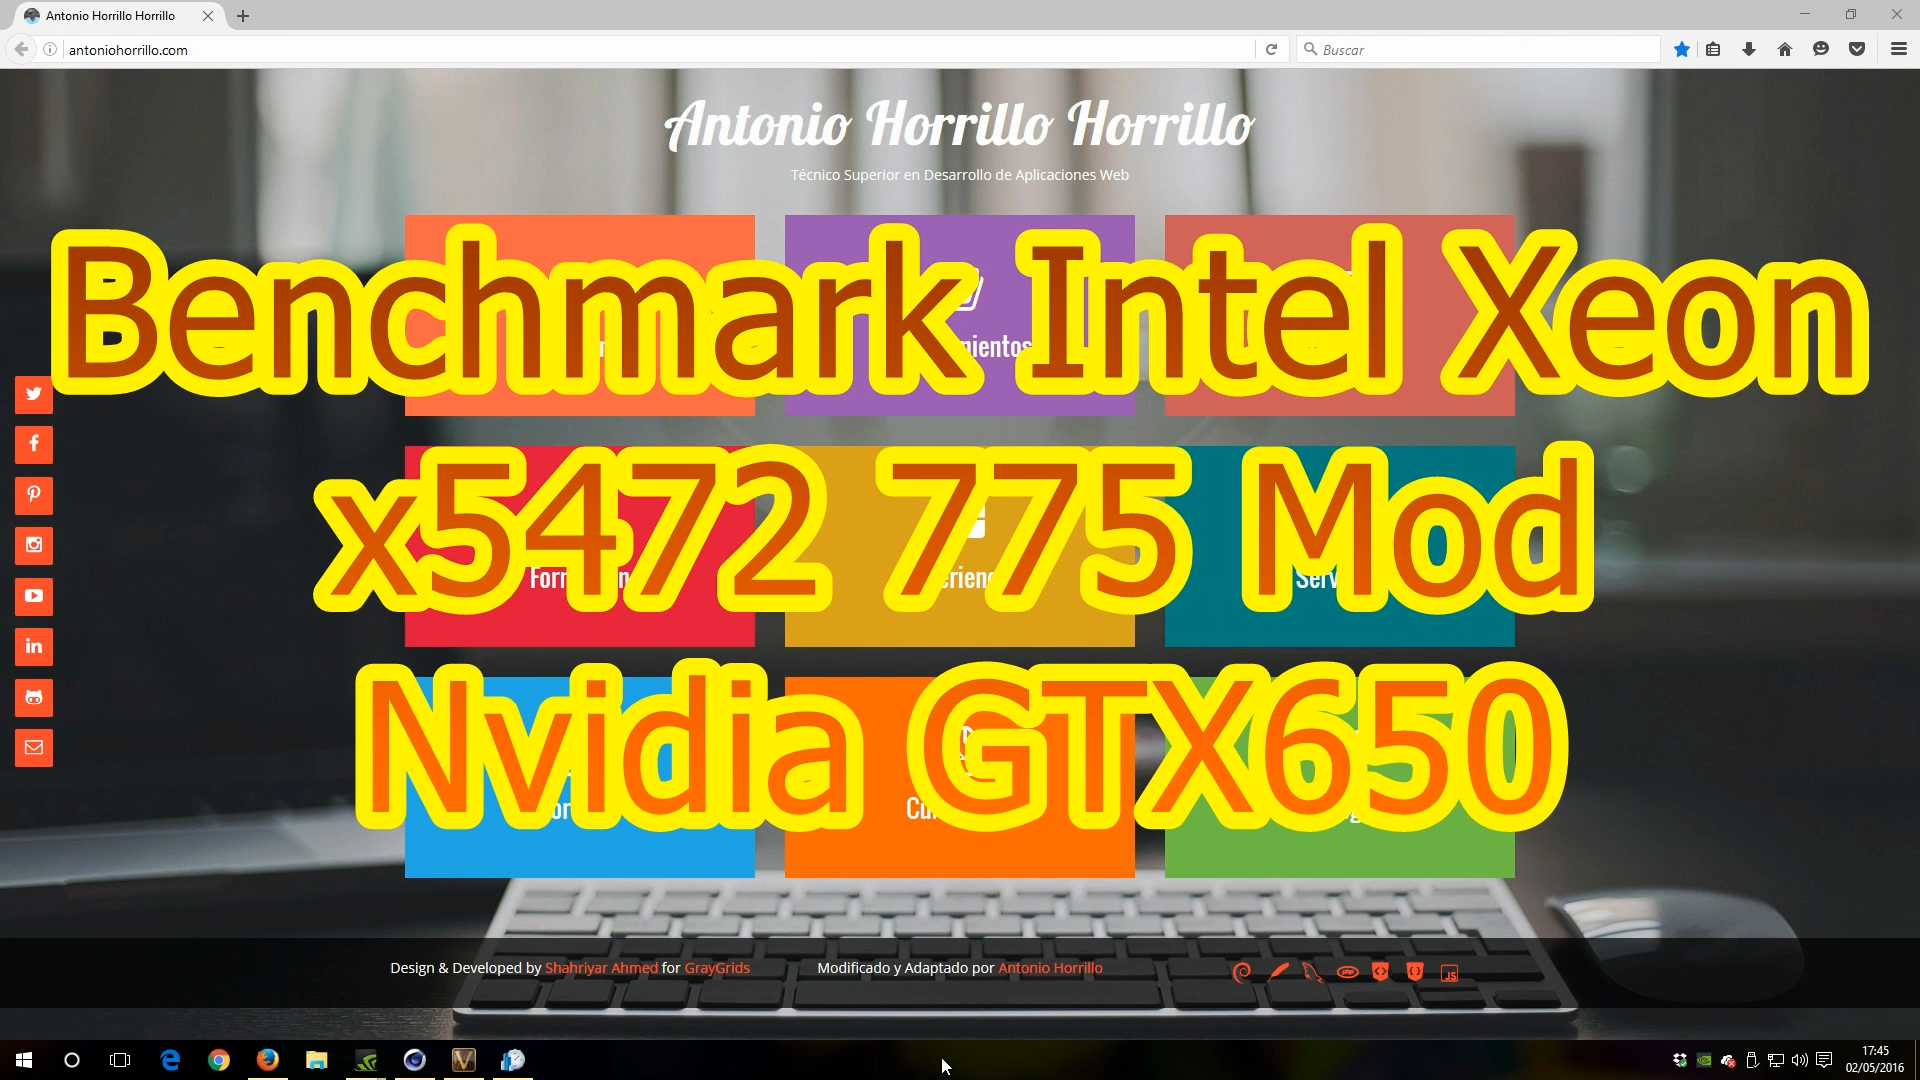 Benchmark Intel Xeon x5472 775 Mod & Nvidia GTX650.